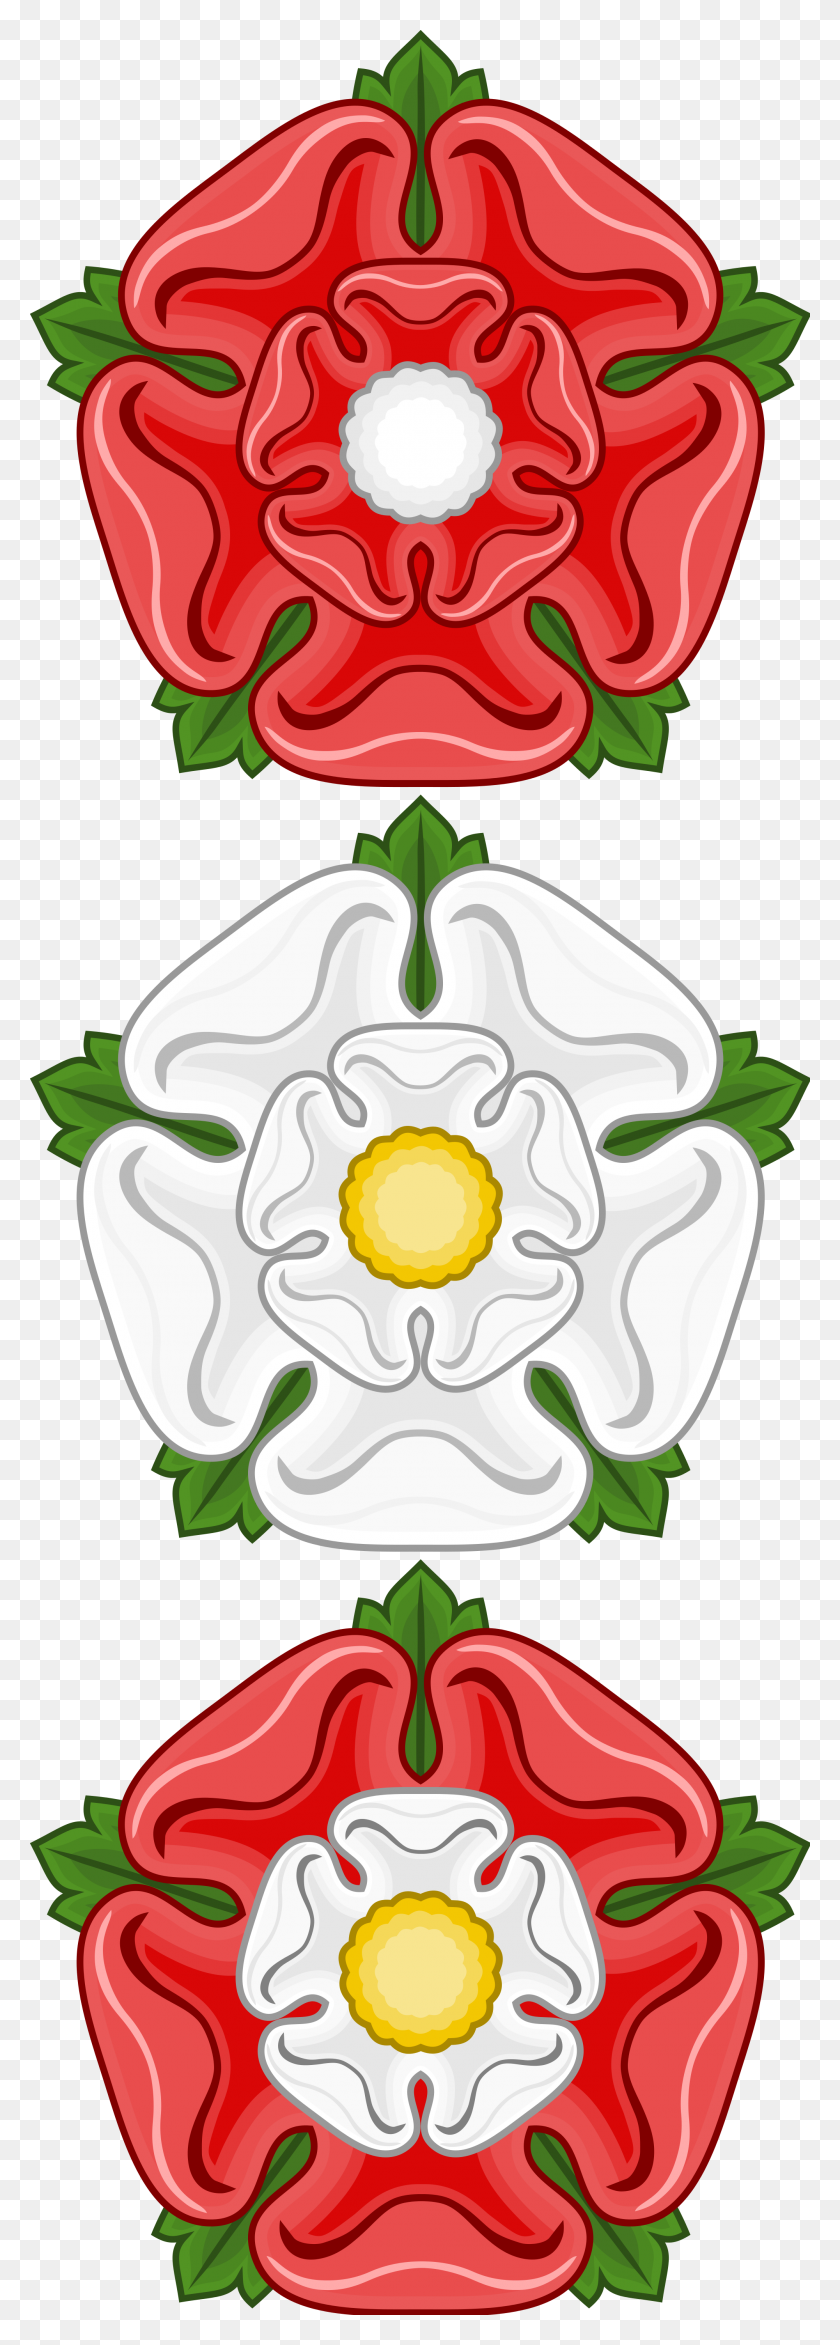 2000x5859 Royal Roses Badge Of England - Rose Border PNG